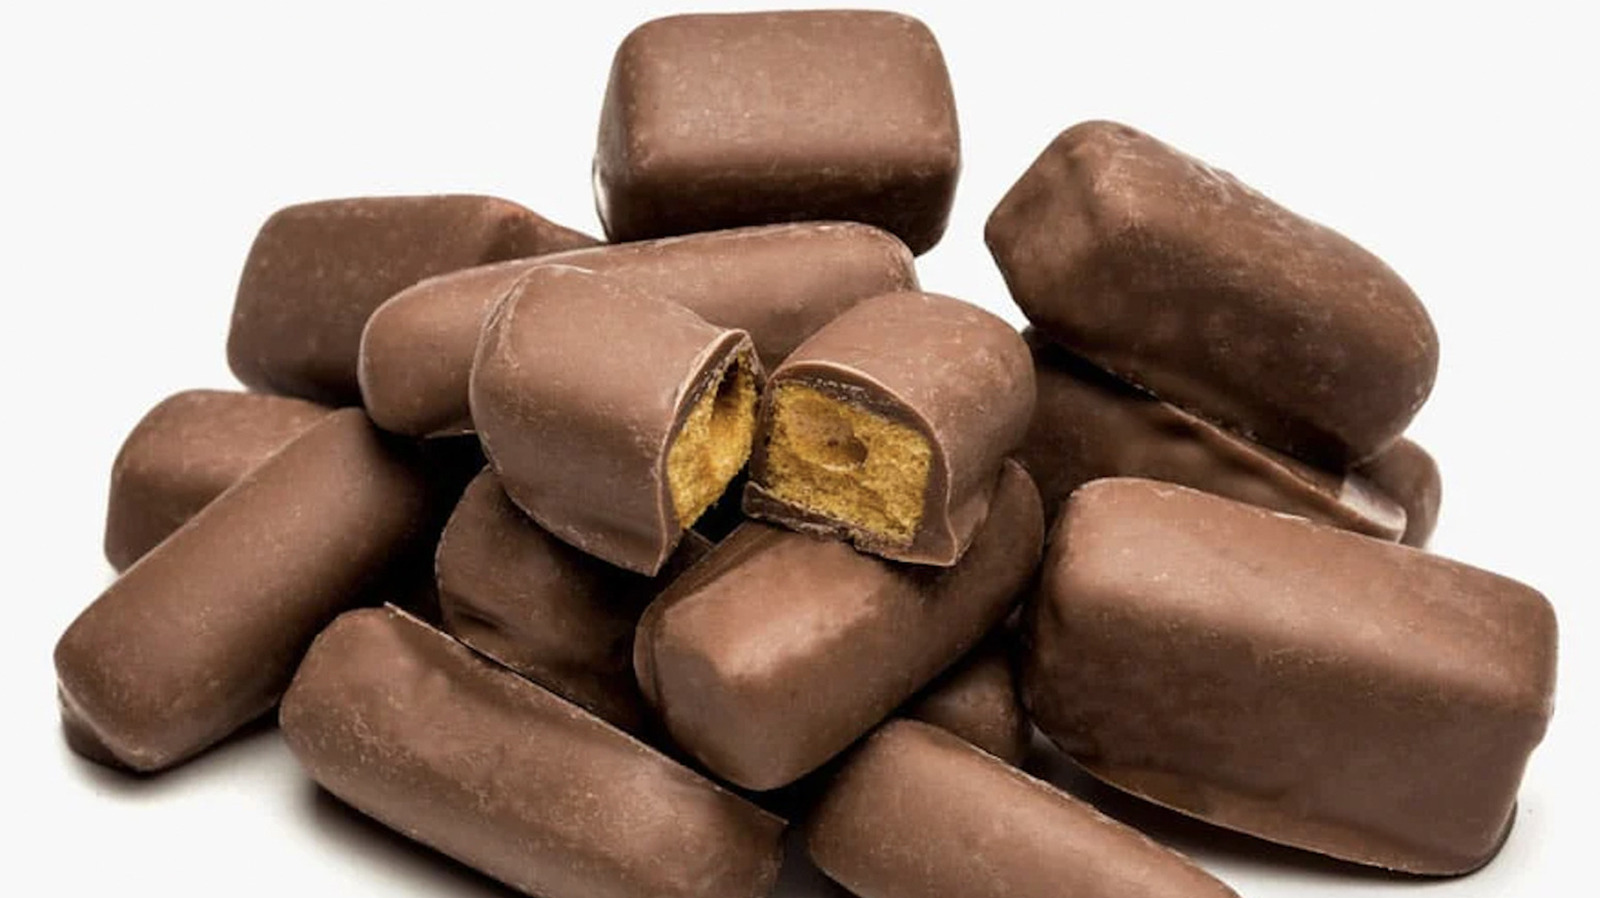 World Famous Sponge Candy by Watson's in Buffalo, NY – Watson's Chocolates